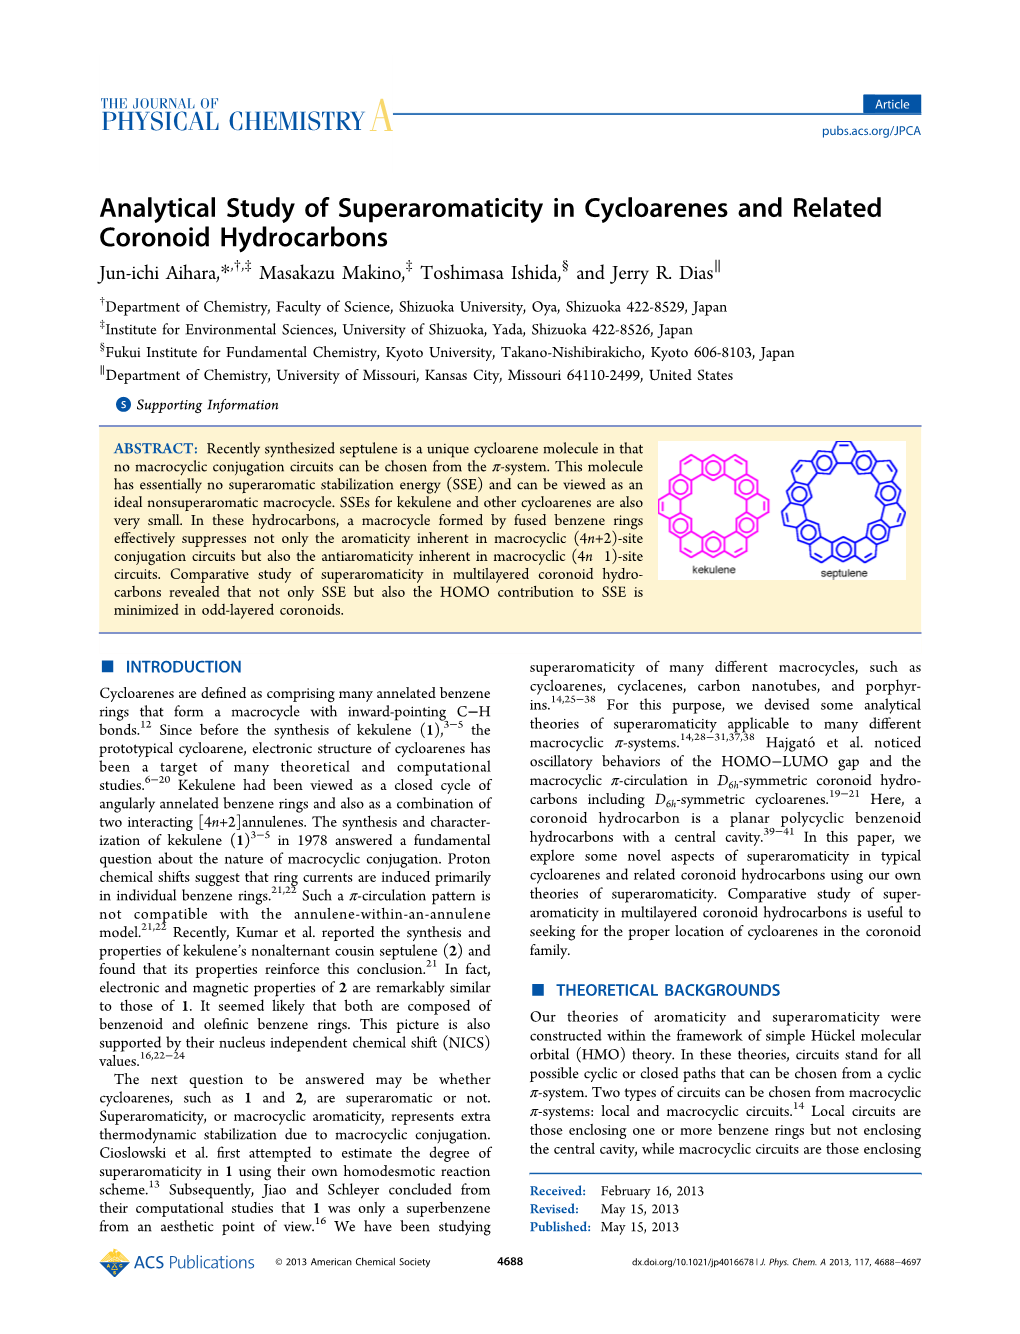 Analytical Study of Superaromaticity in Cycloarenes and Related Coronoid Hydrocarbons Jun-Ichi Aihara,*,†,‡ Masakazu Makino,‡ Toshimasa Ishida,§ and Jerry R